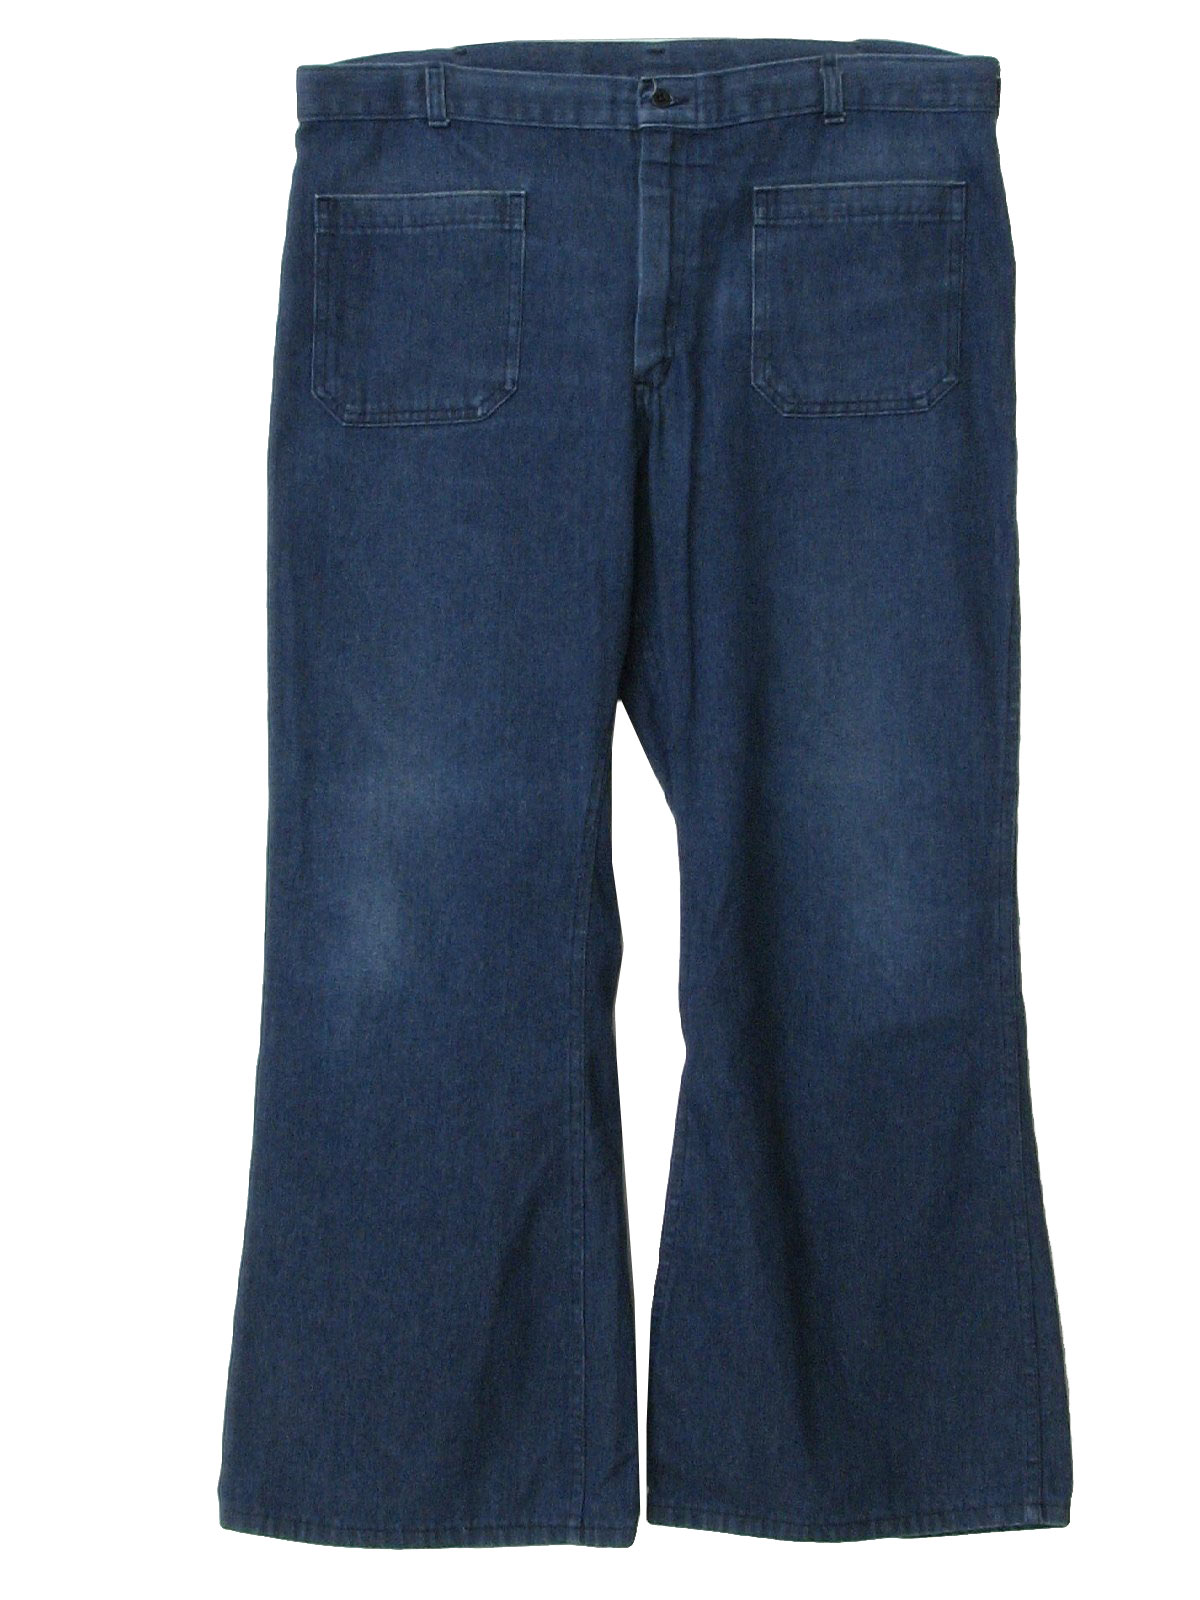 70s Bellbottom Pants (Navdungaree): 70s -Navdungaree- Mens blue cotton ...